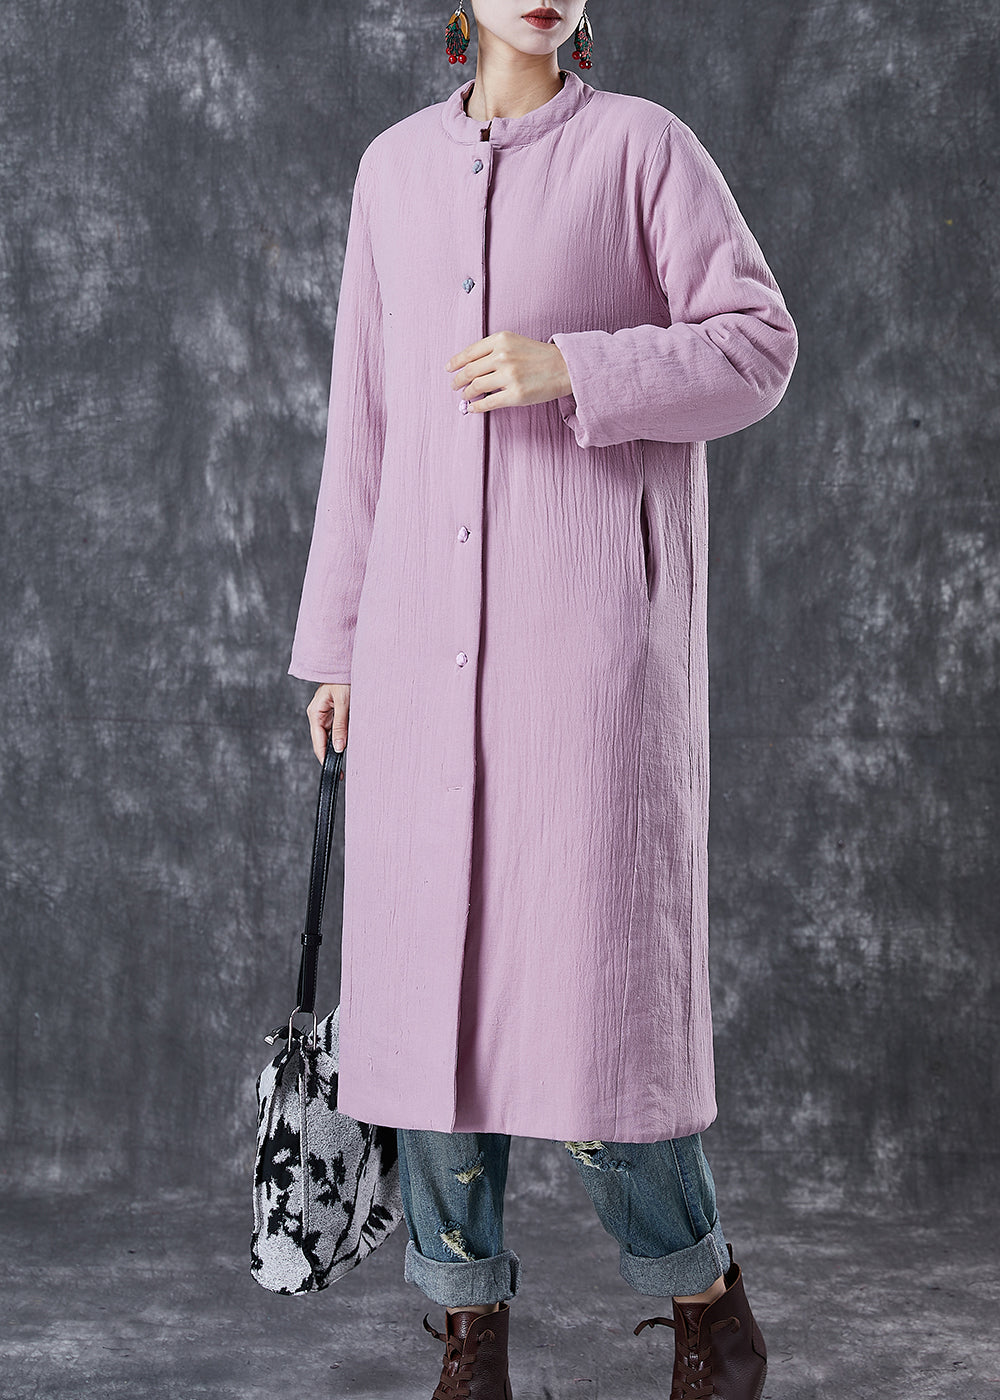 Elegant Purple Pockets Thick Fine Cotton Filled Long Coats Winter